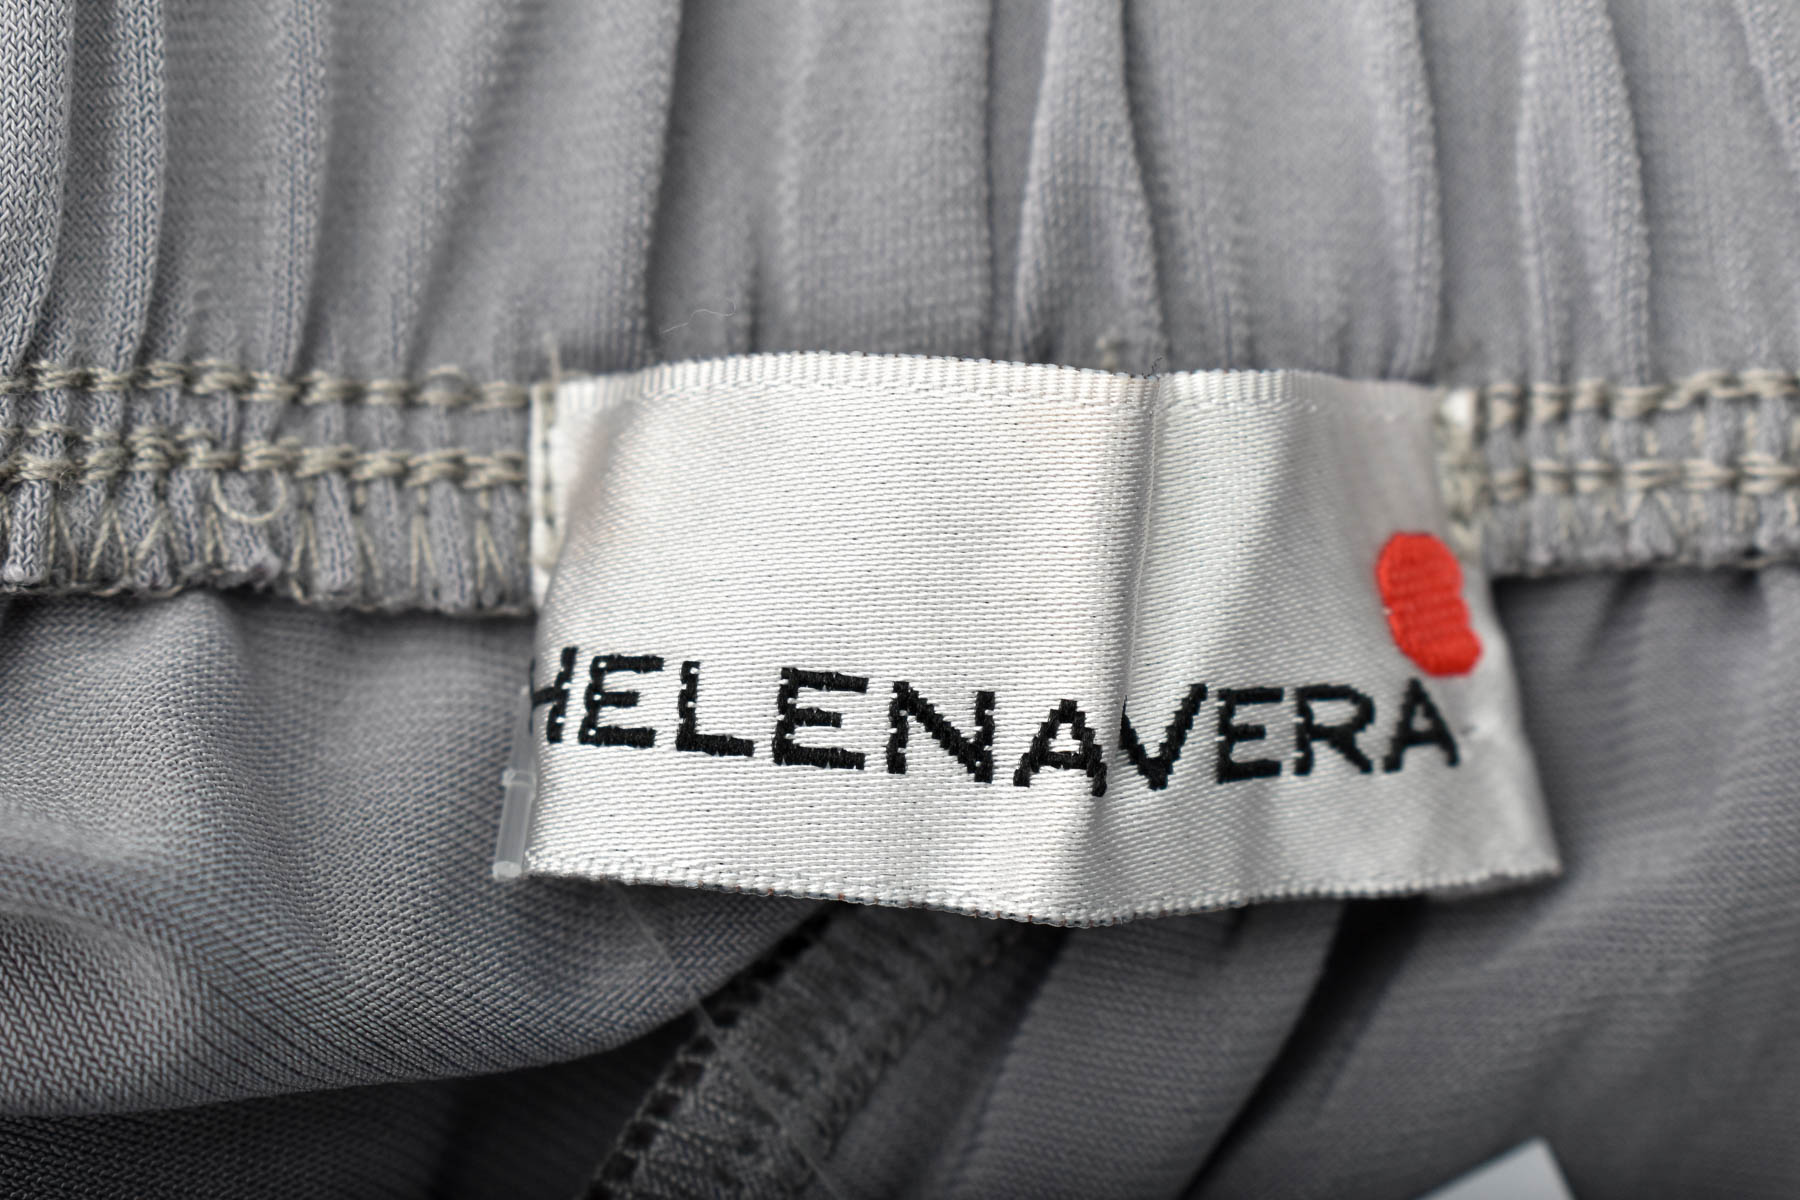 Pantaloni de damă - Helena Vera - 2